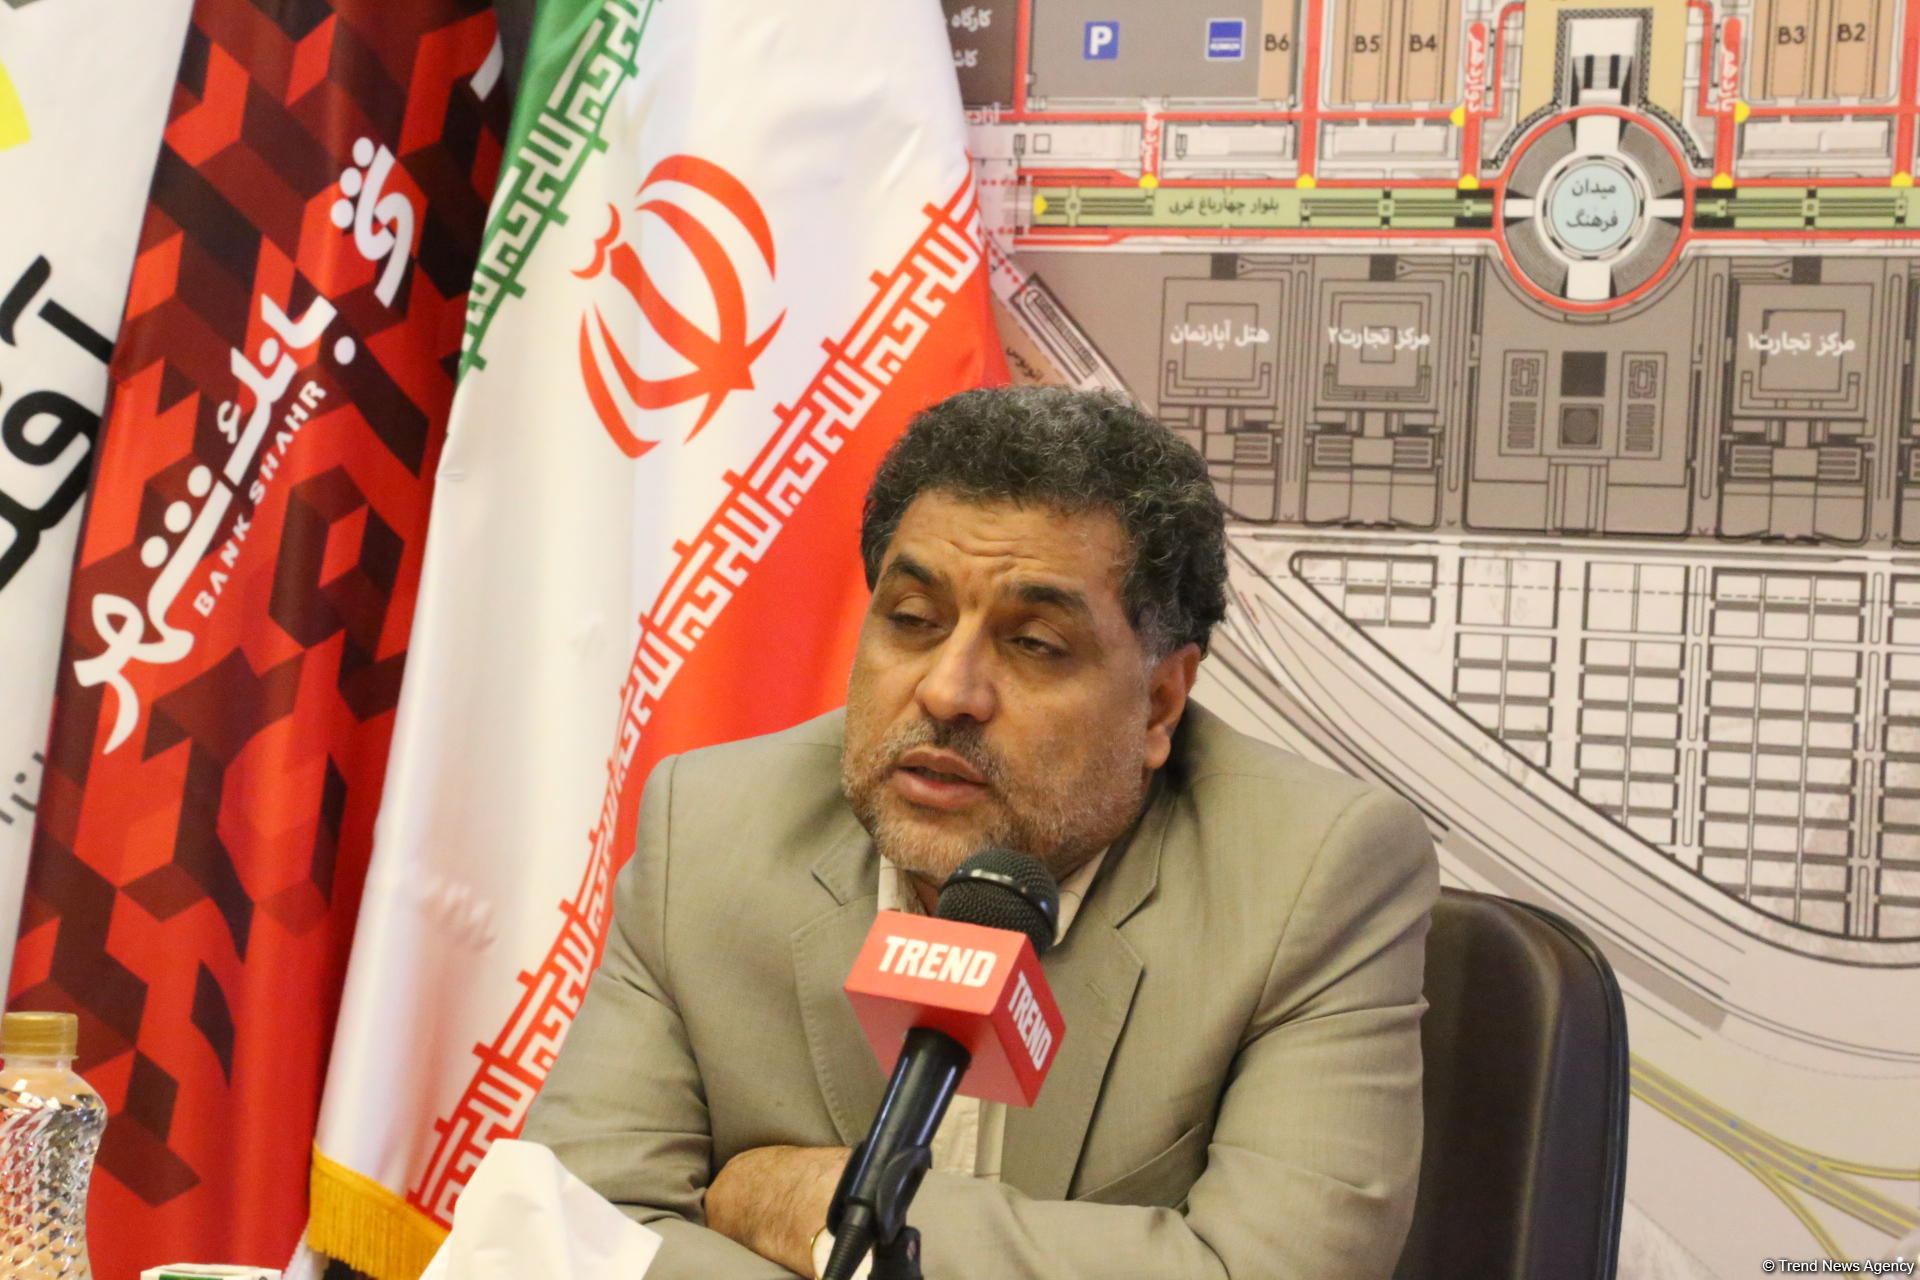 Iran to host stationaries, office, engineering B2B expo